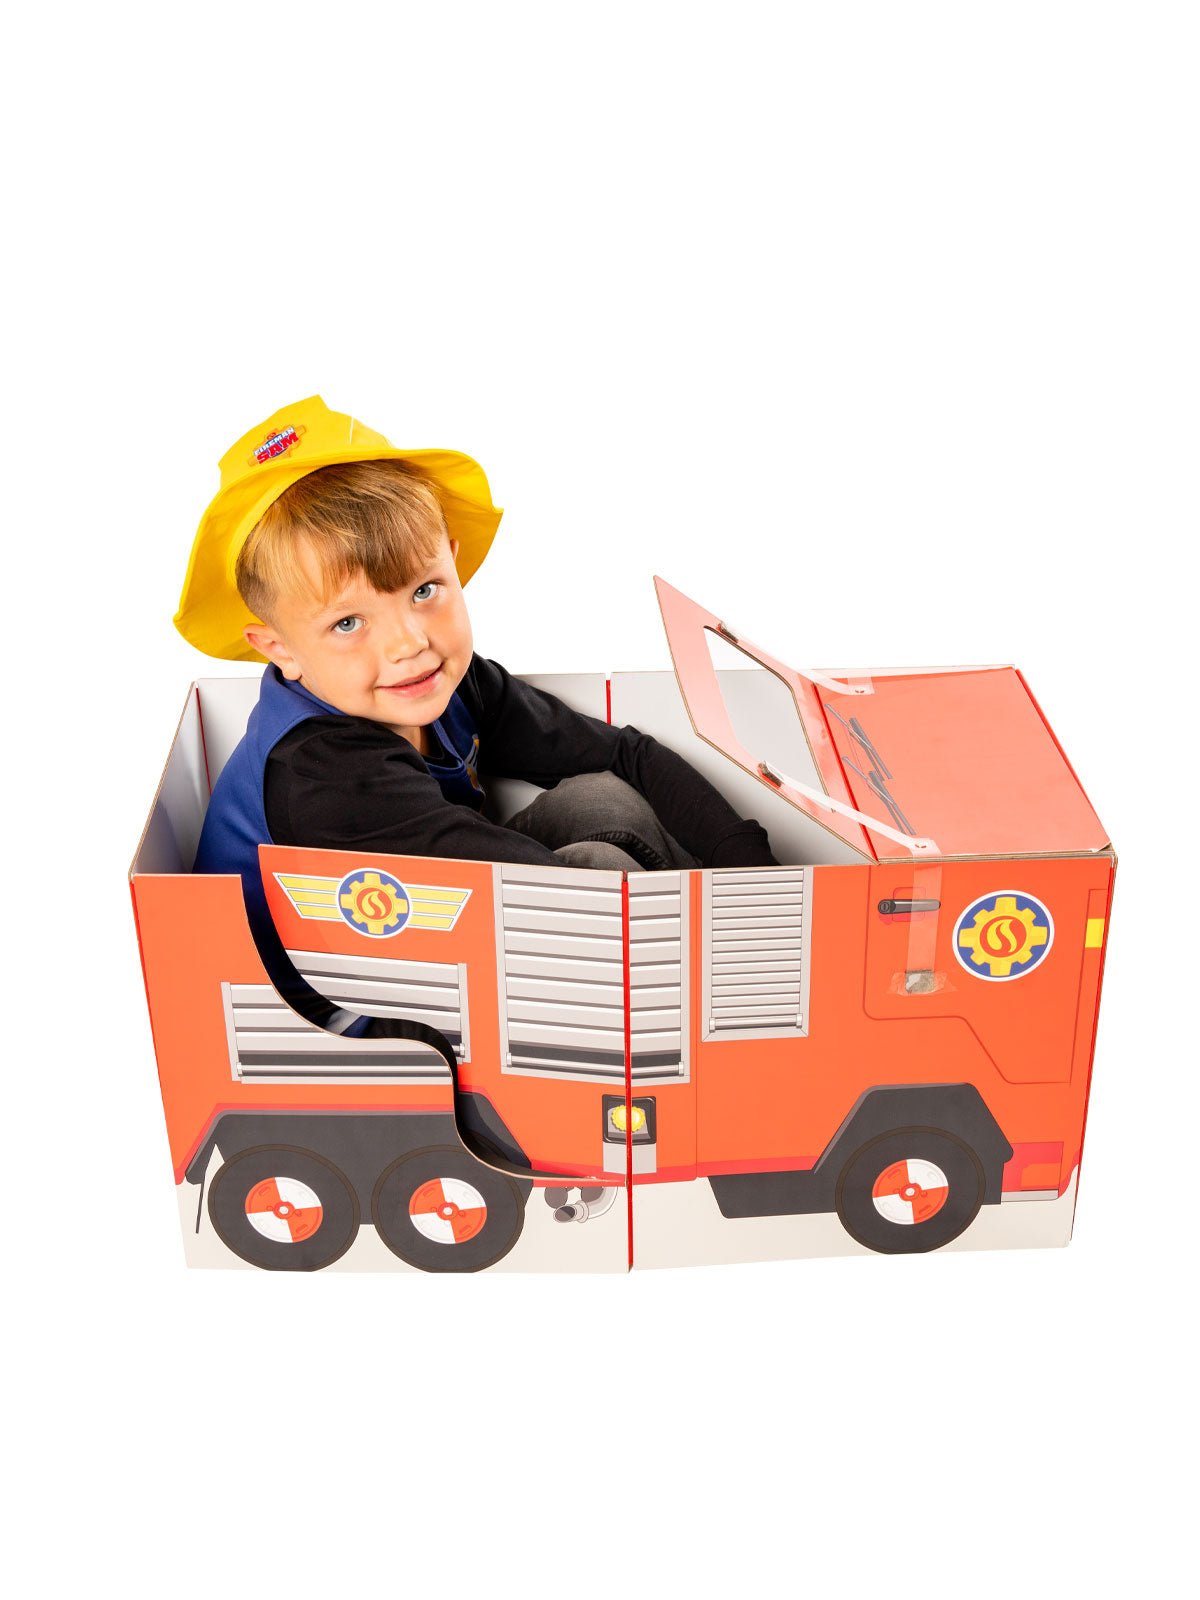 Fireman Sam Firefighter Toy Accessory Set - Costume, Hat, Firetruck